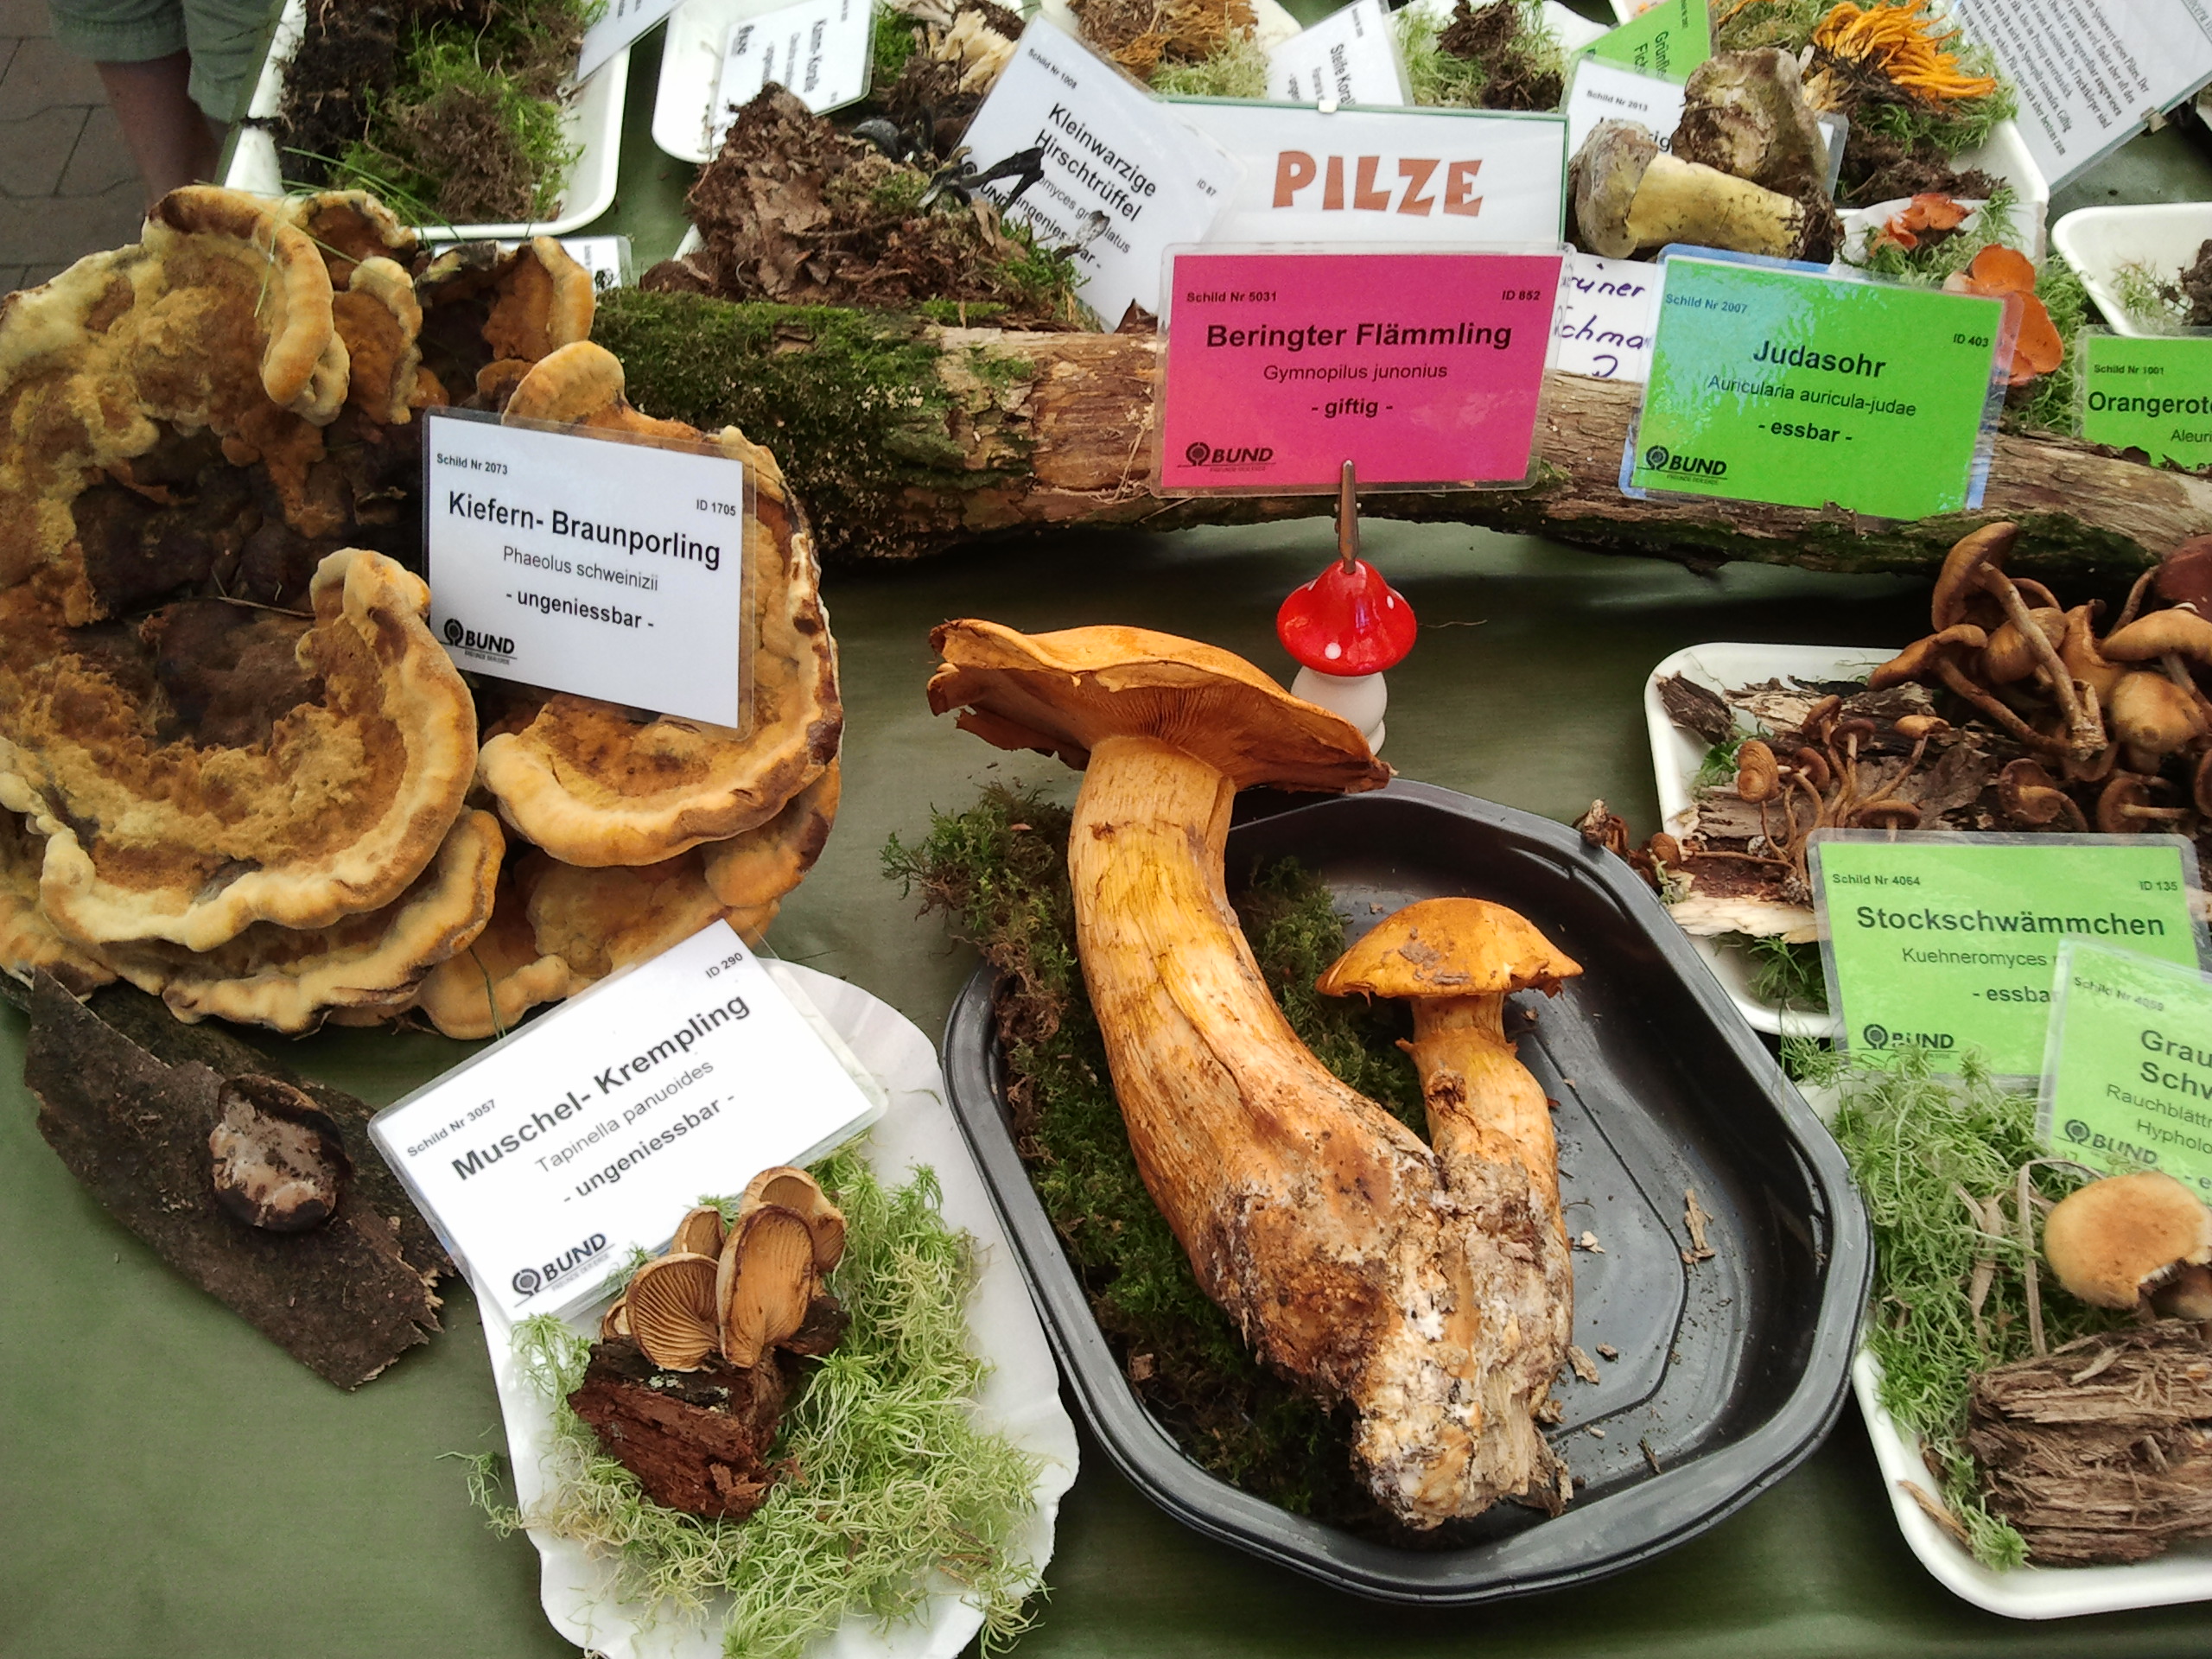 Pilzausstellung in Zwönitz